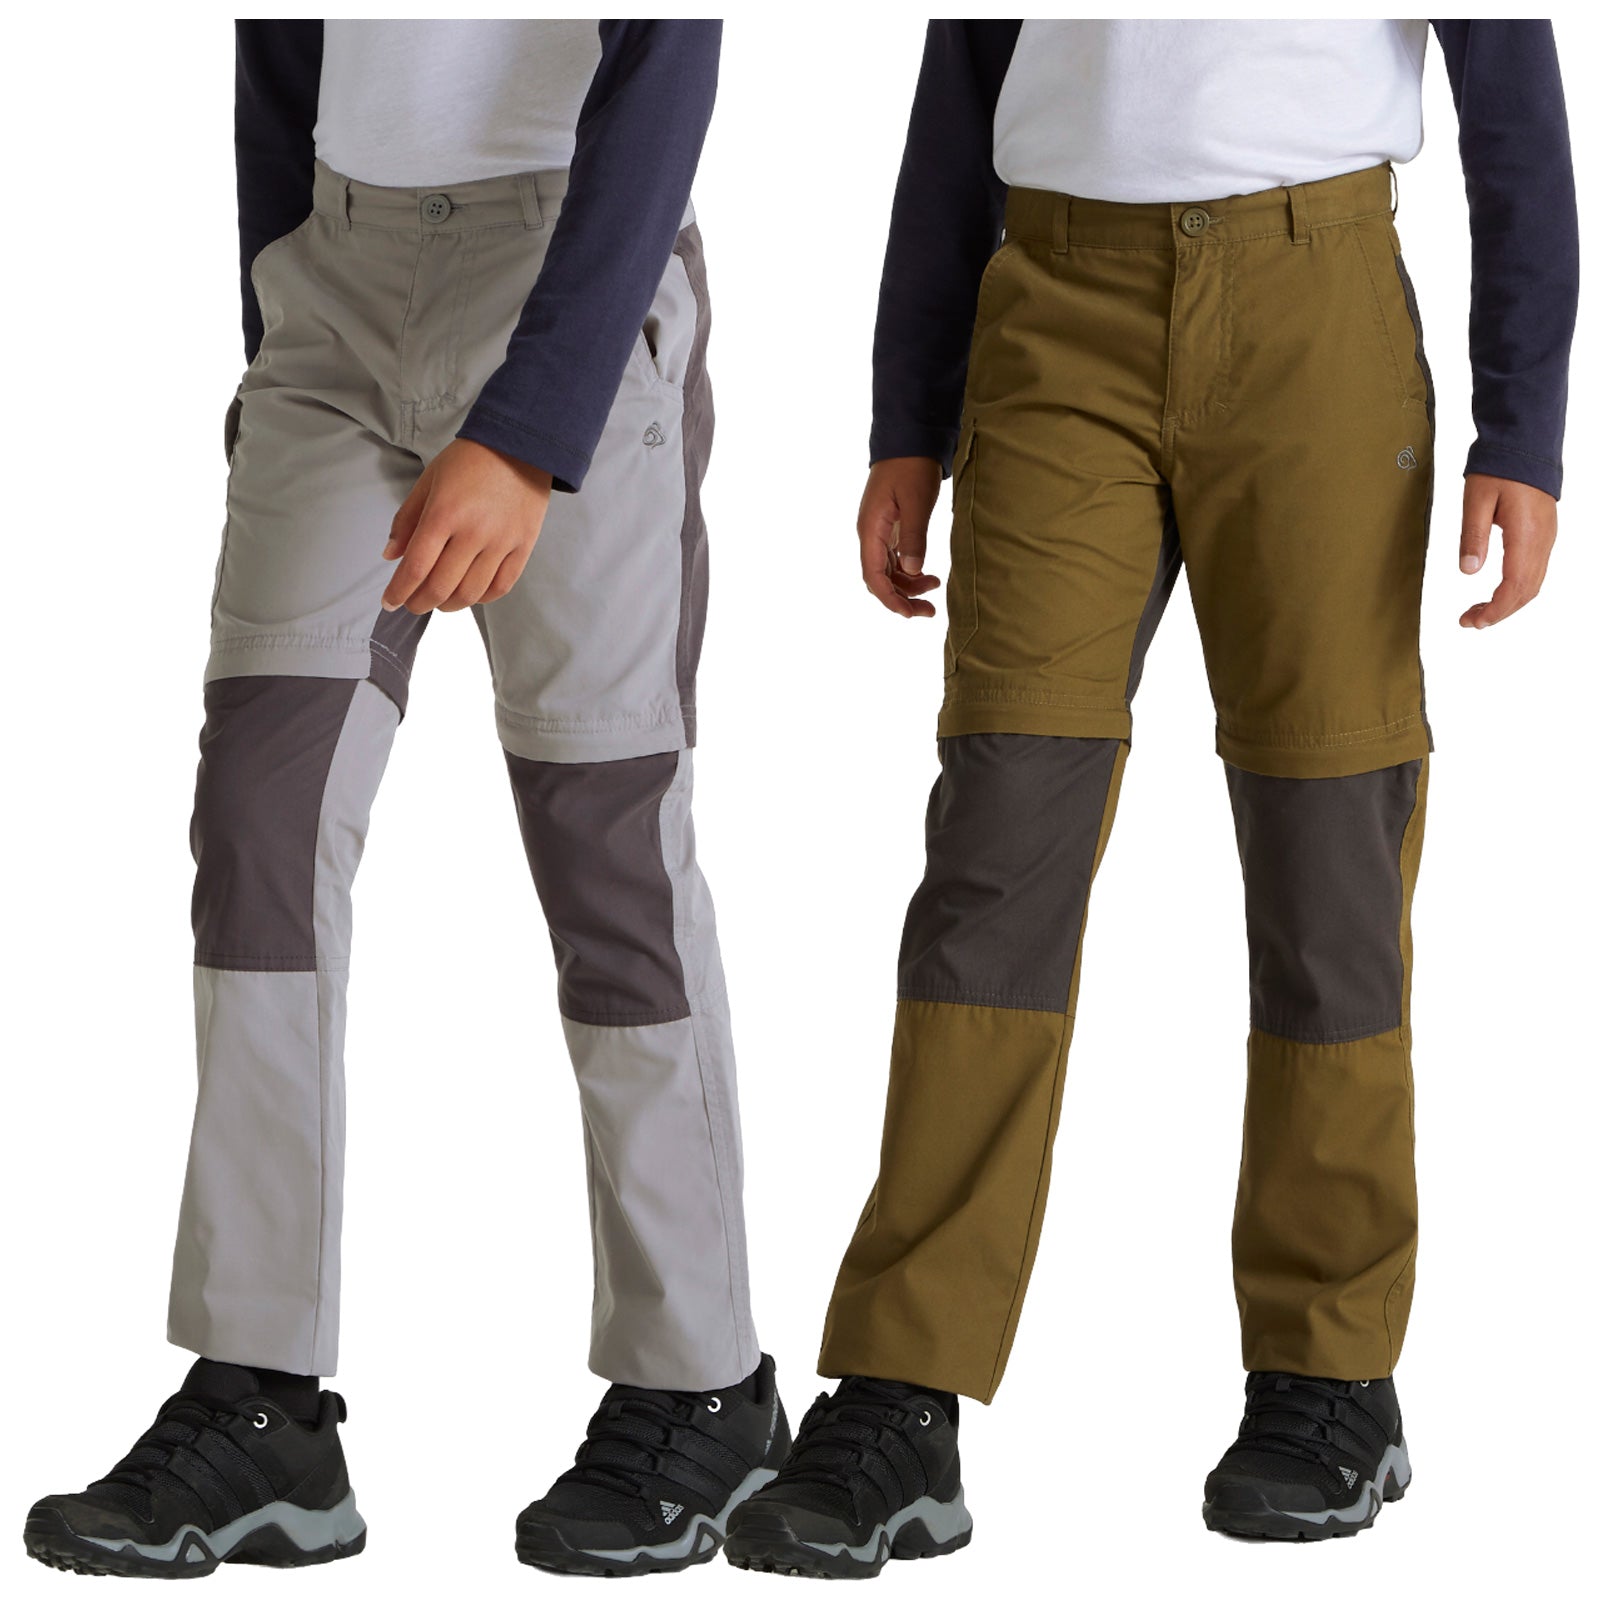 Craghoppers Junior Kiwi Convertible Trousers